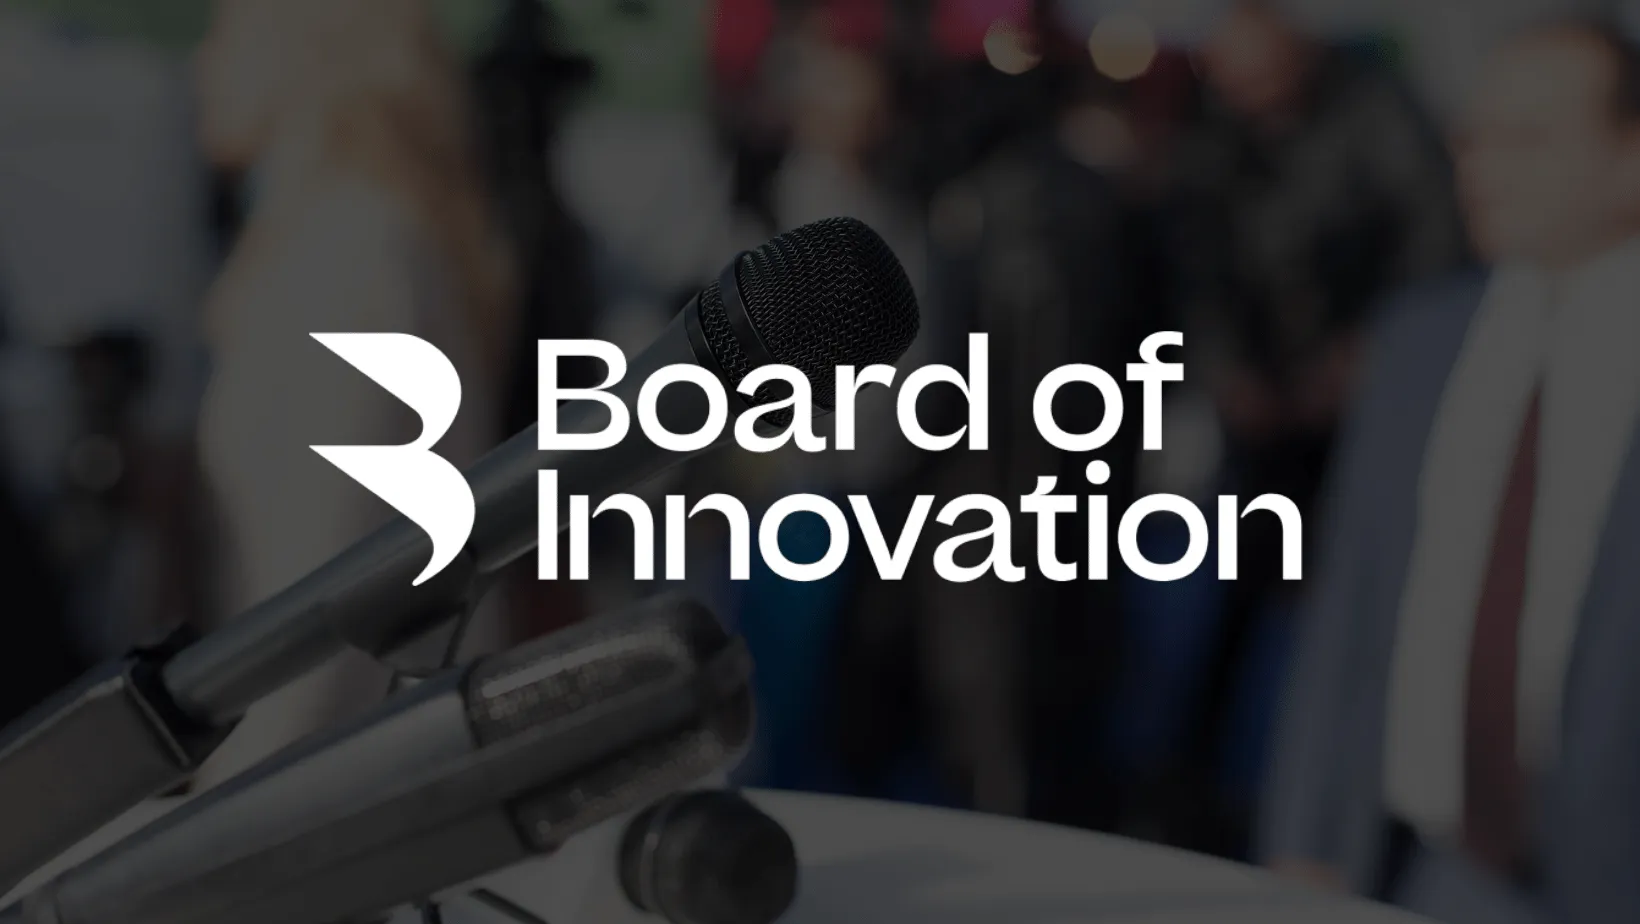 White Board of Innovation logo over a dark background.